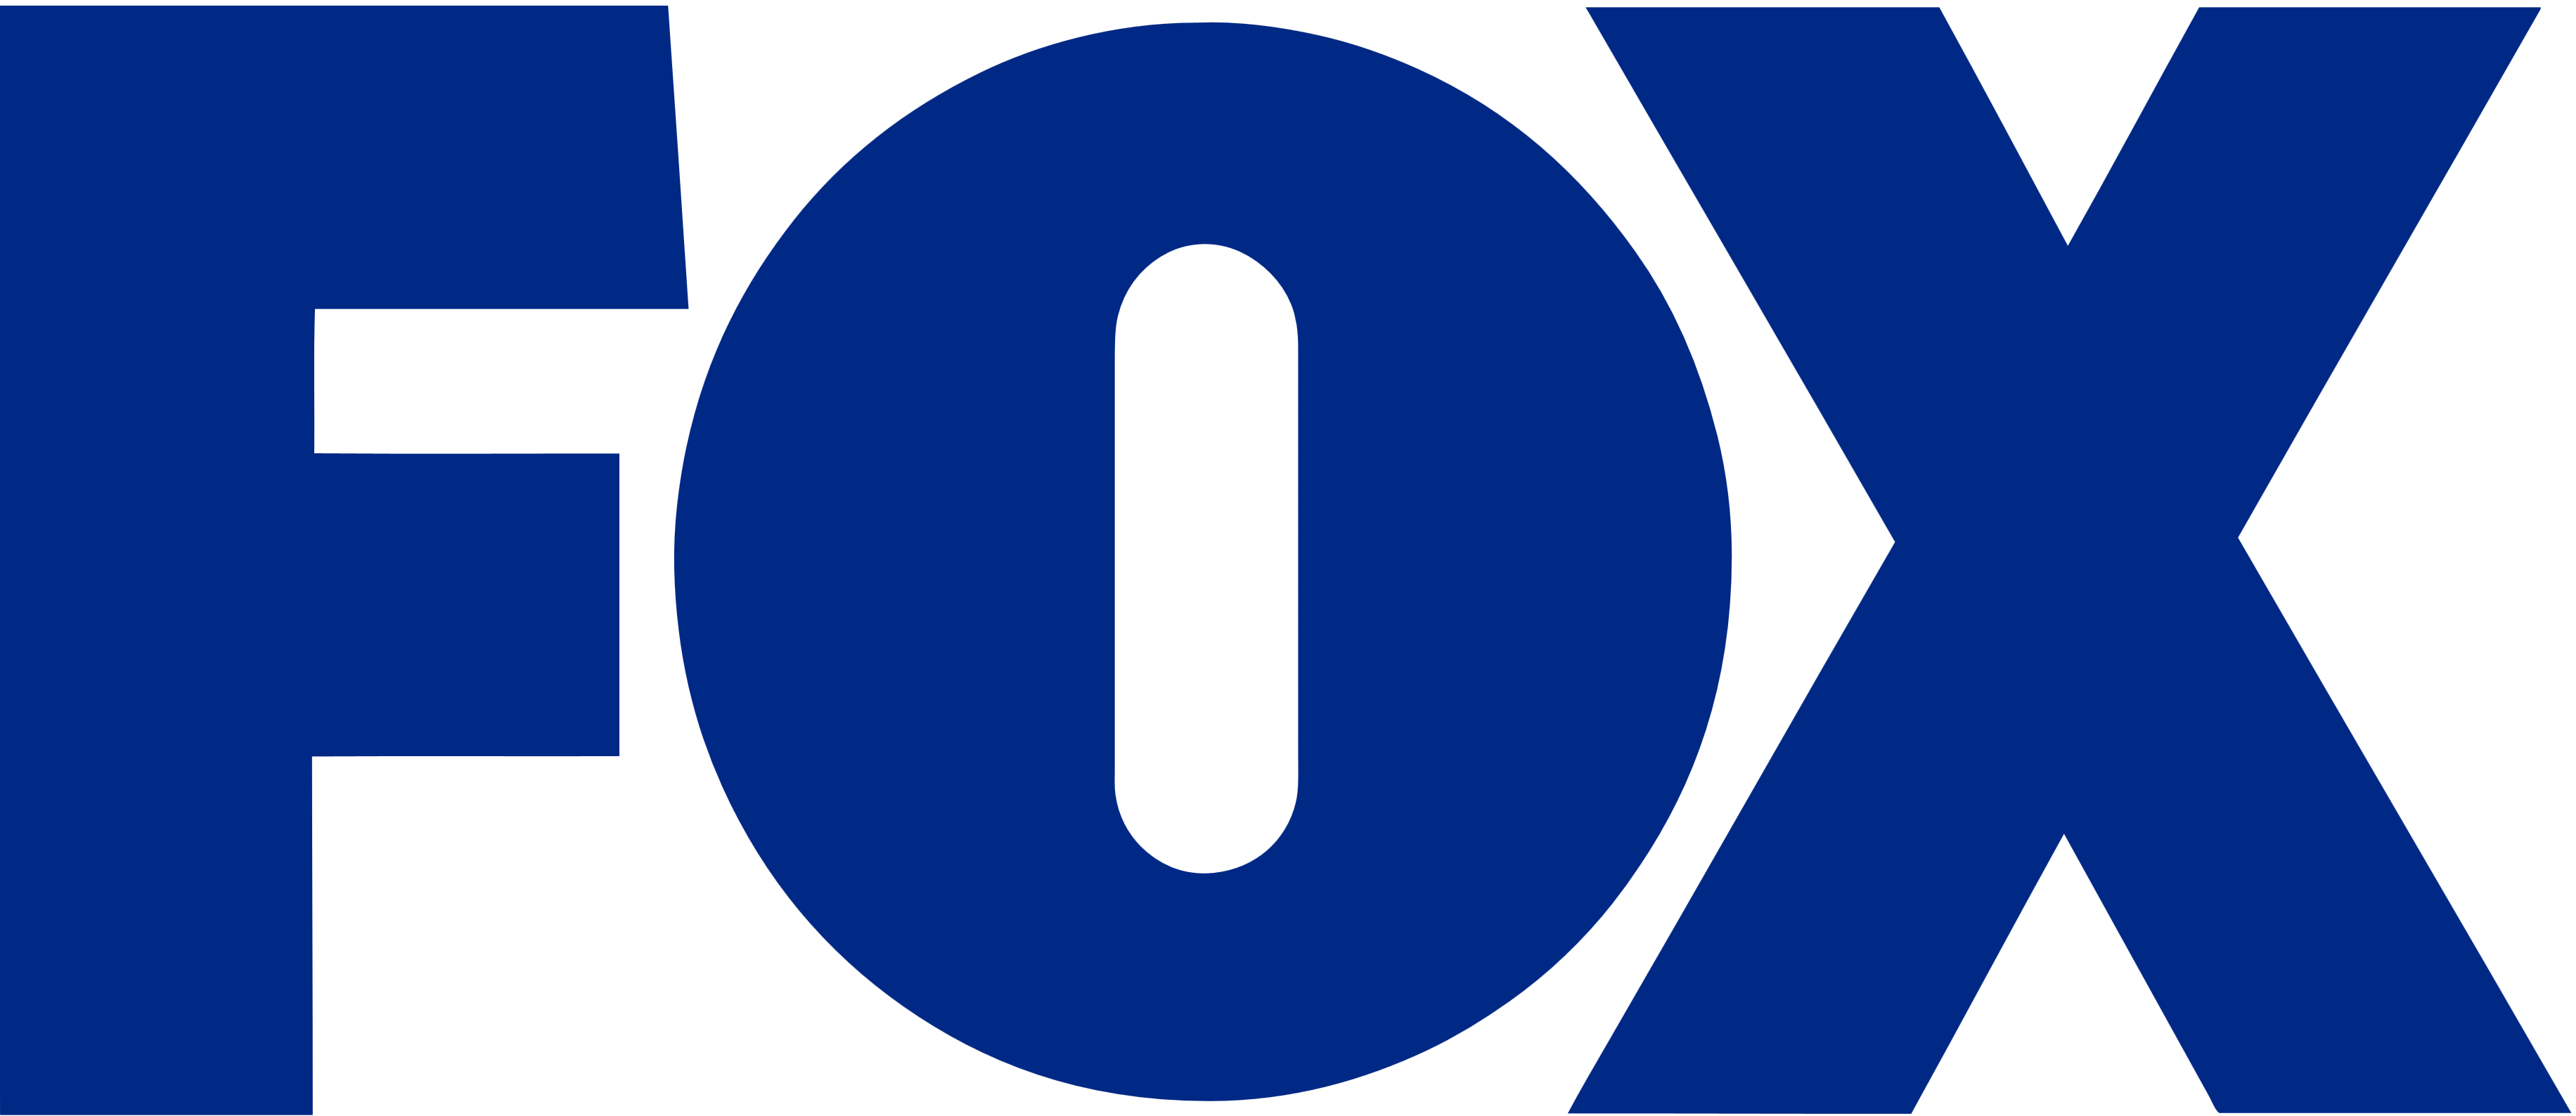 fox-logo-png-1629